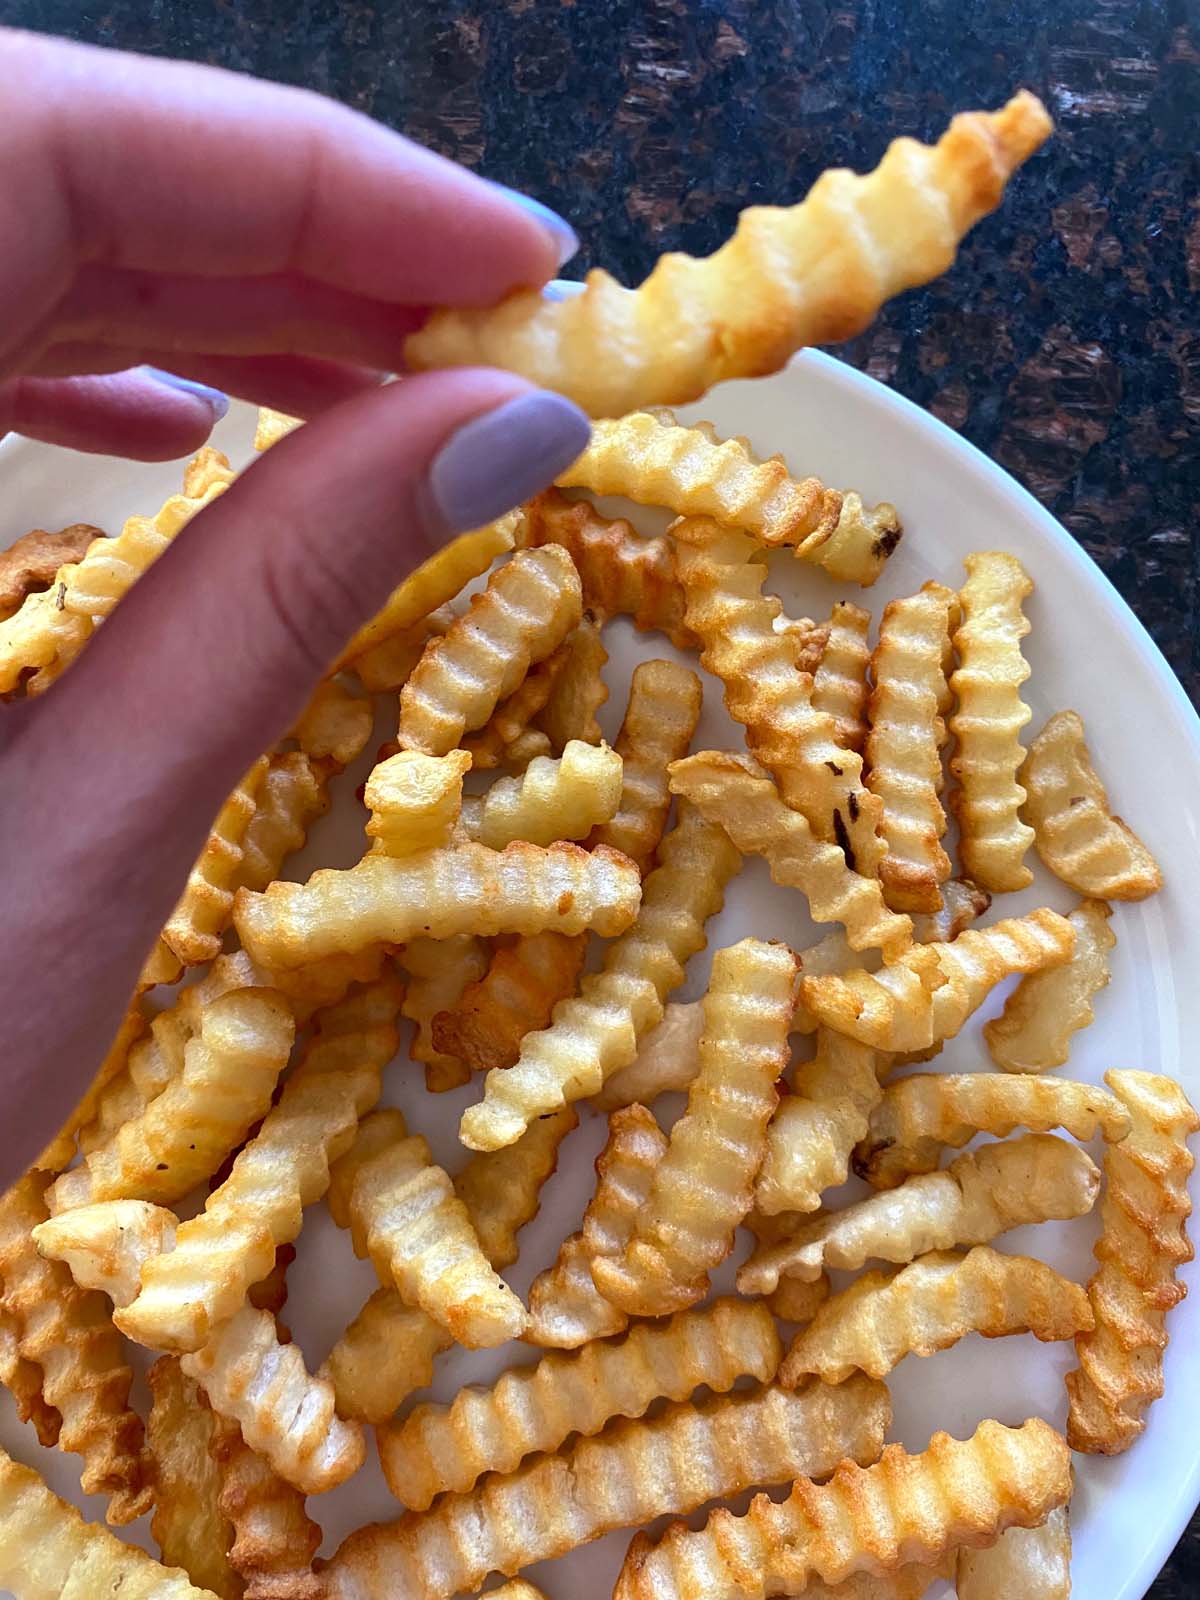 Frozen Crinkle Fries in Air Fryer - always use butter